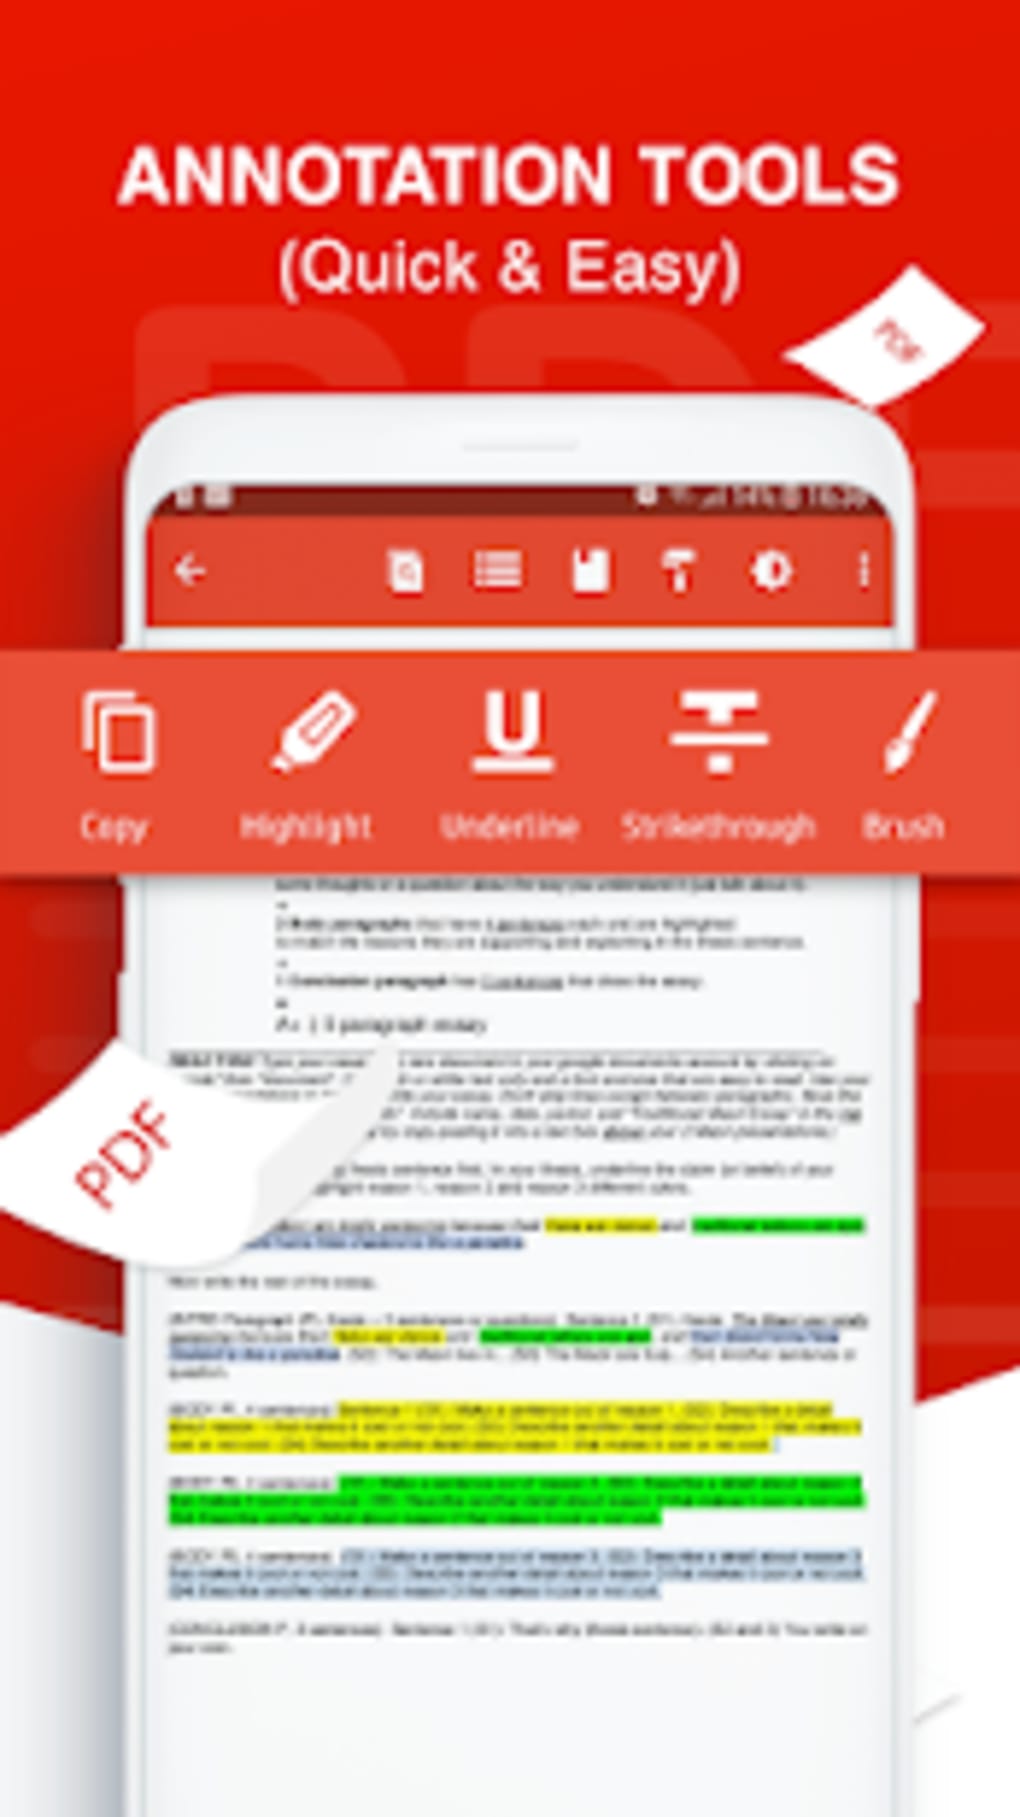 lightweight pdf reader android